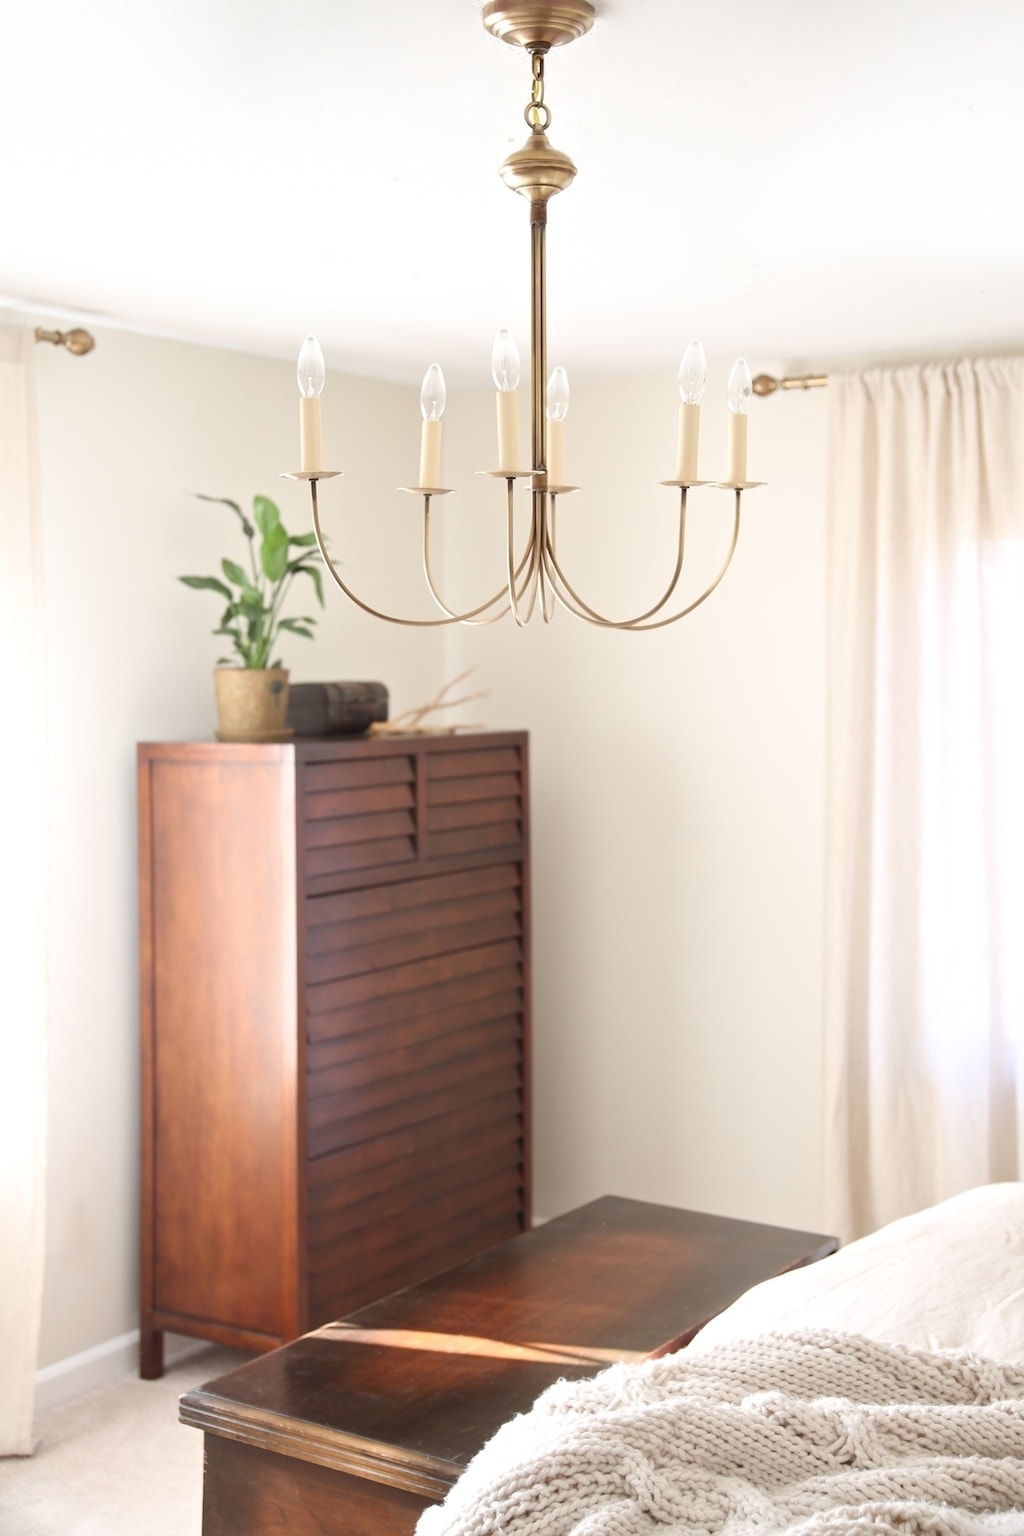 http://julieblanner.com/wp-content/uploads/2015/02/master-bedroom-light.jpg